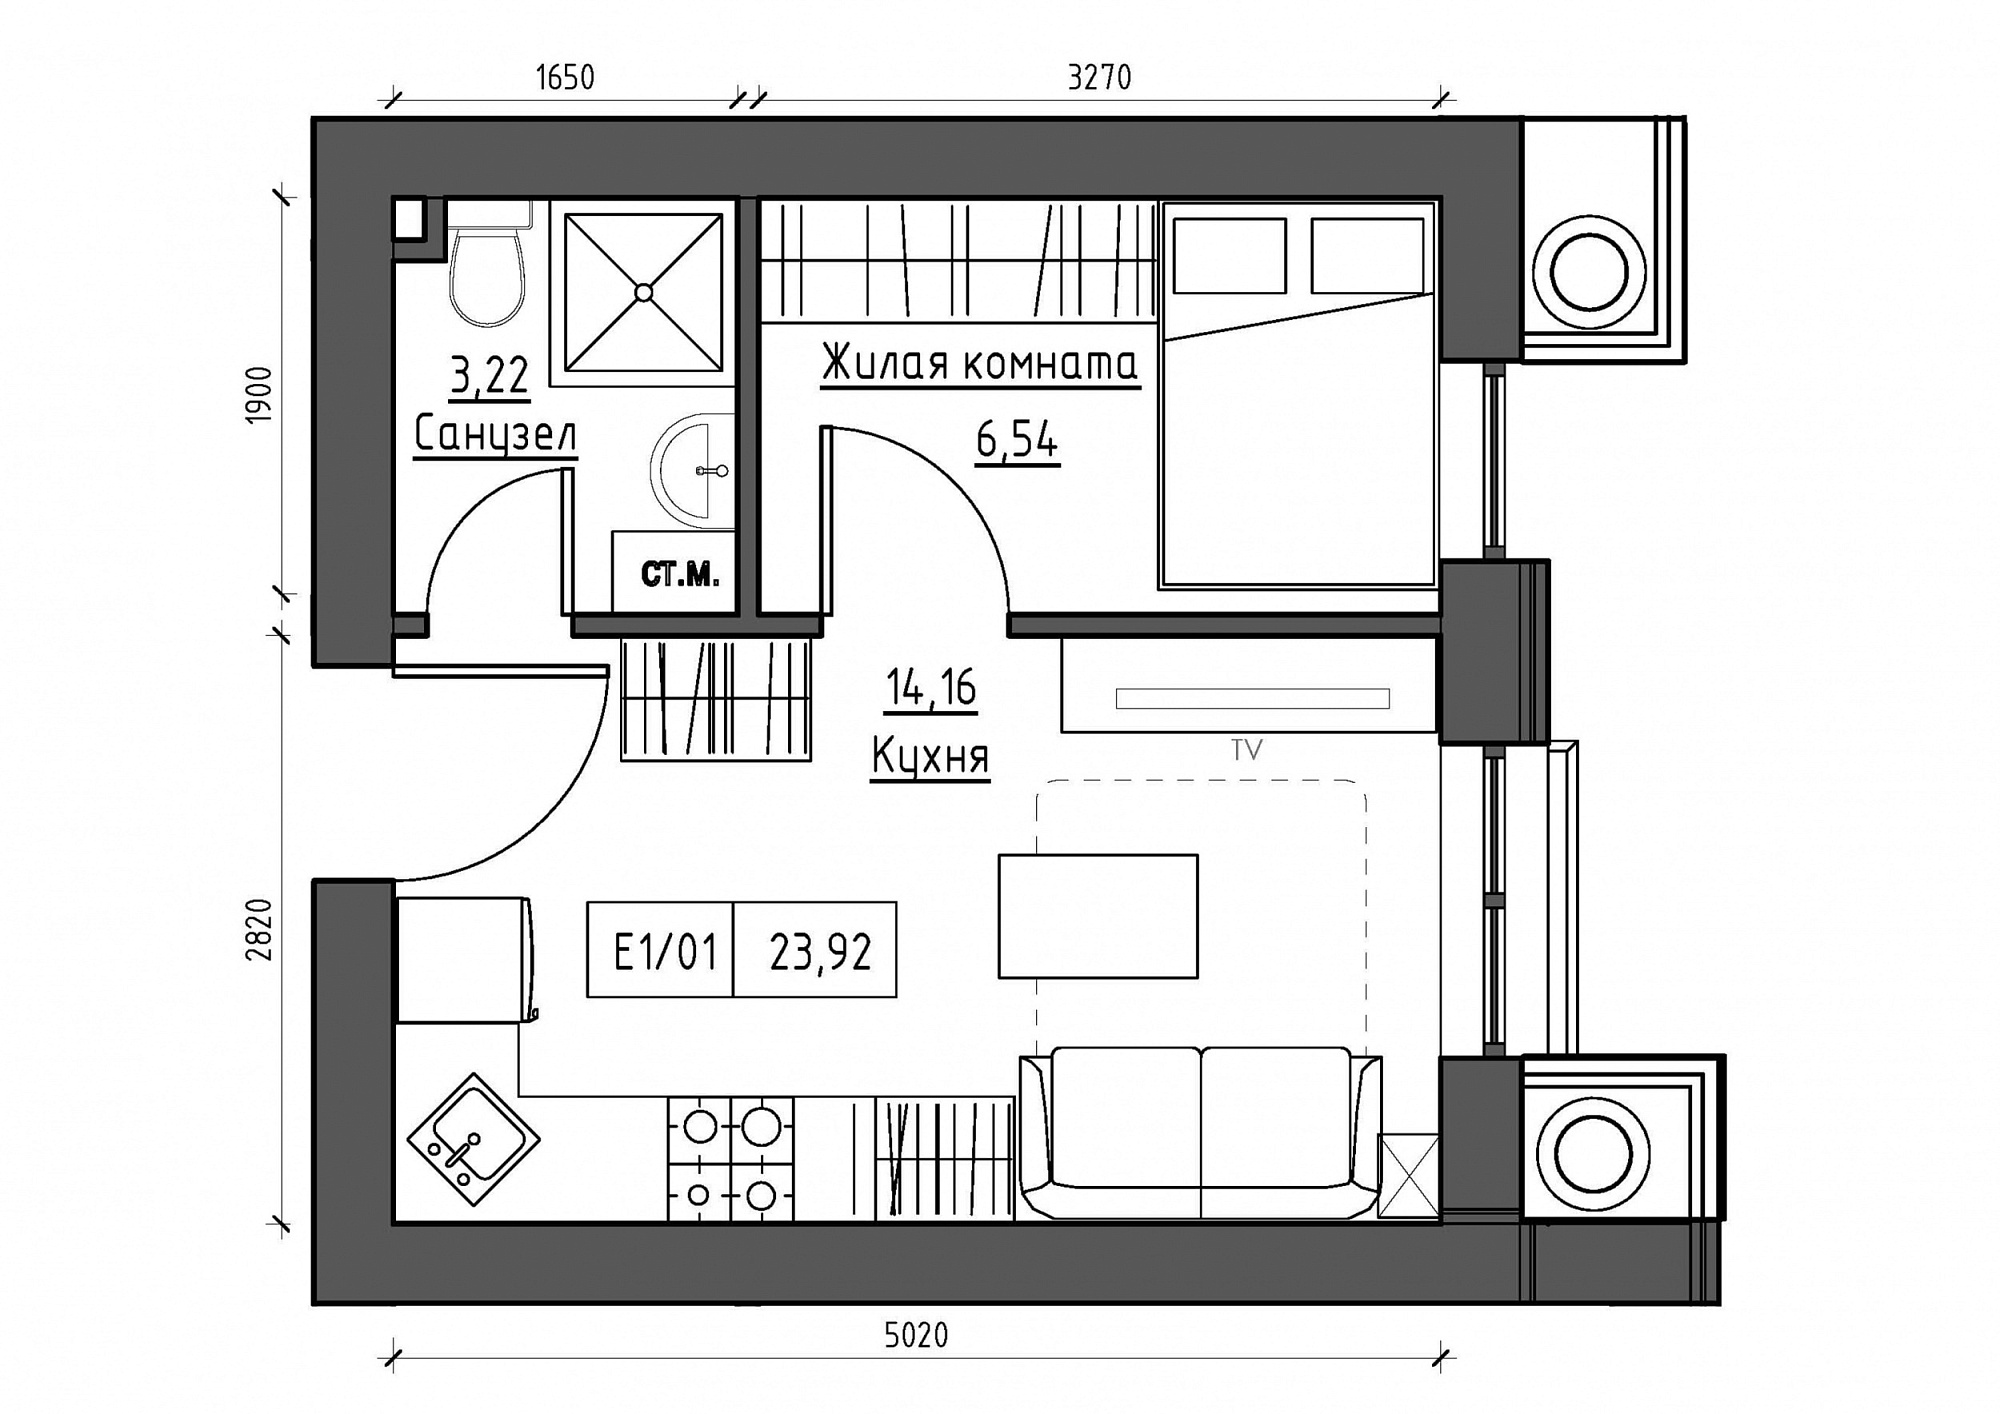 Planning 1-rm flats area 23.92m2, KS-011-05/0004.